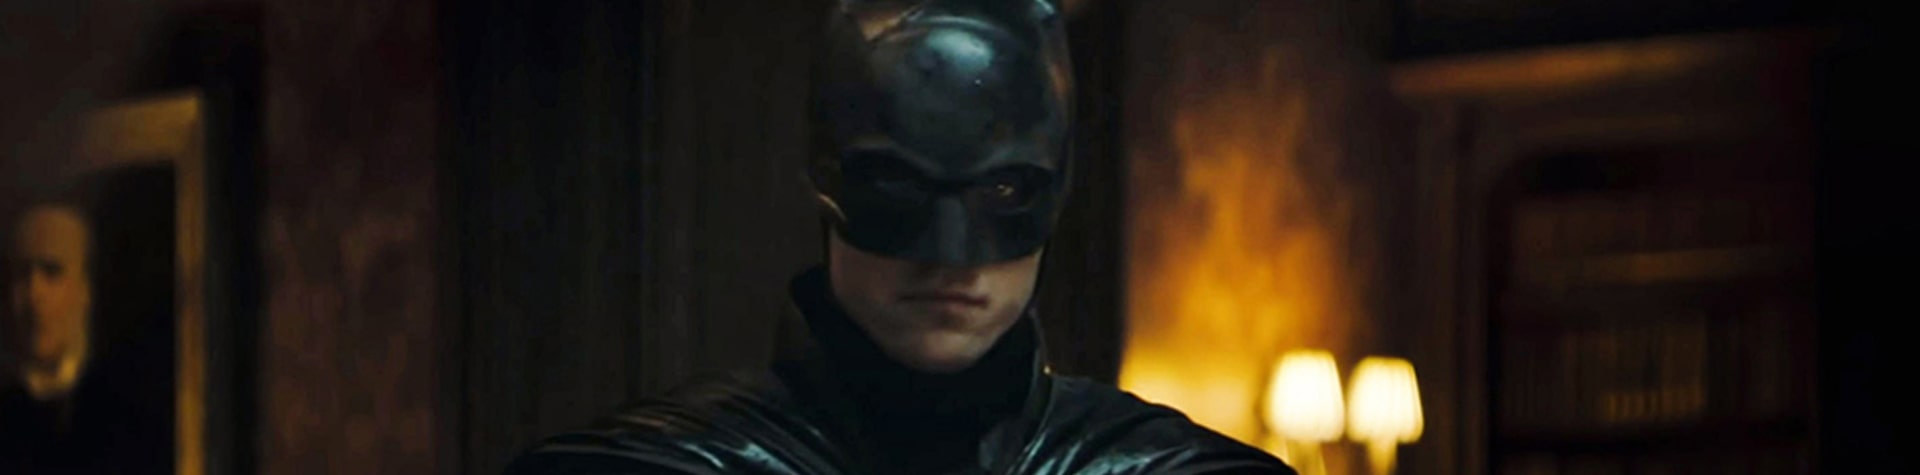 Michael Giacchino – The Batman